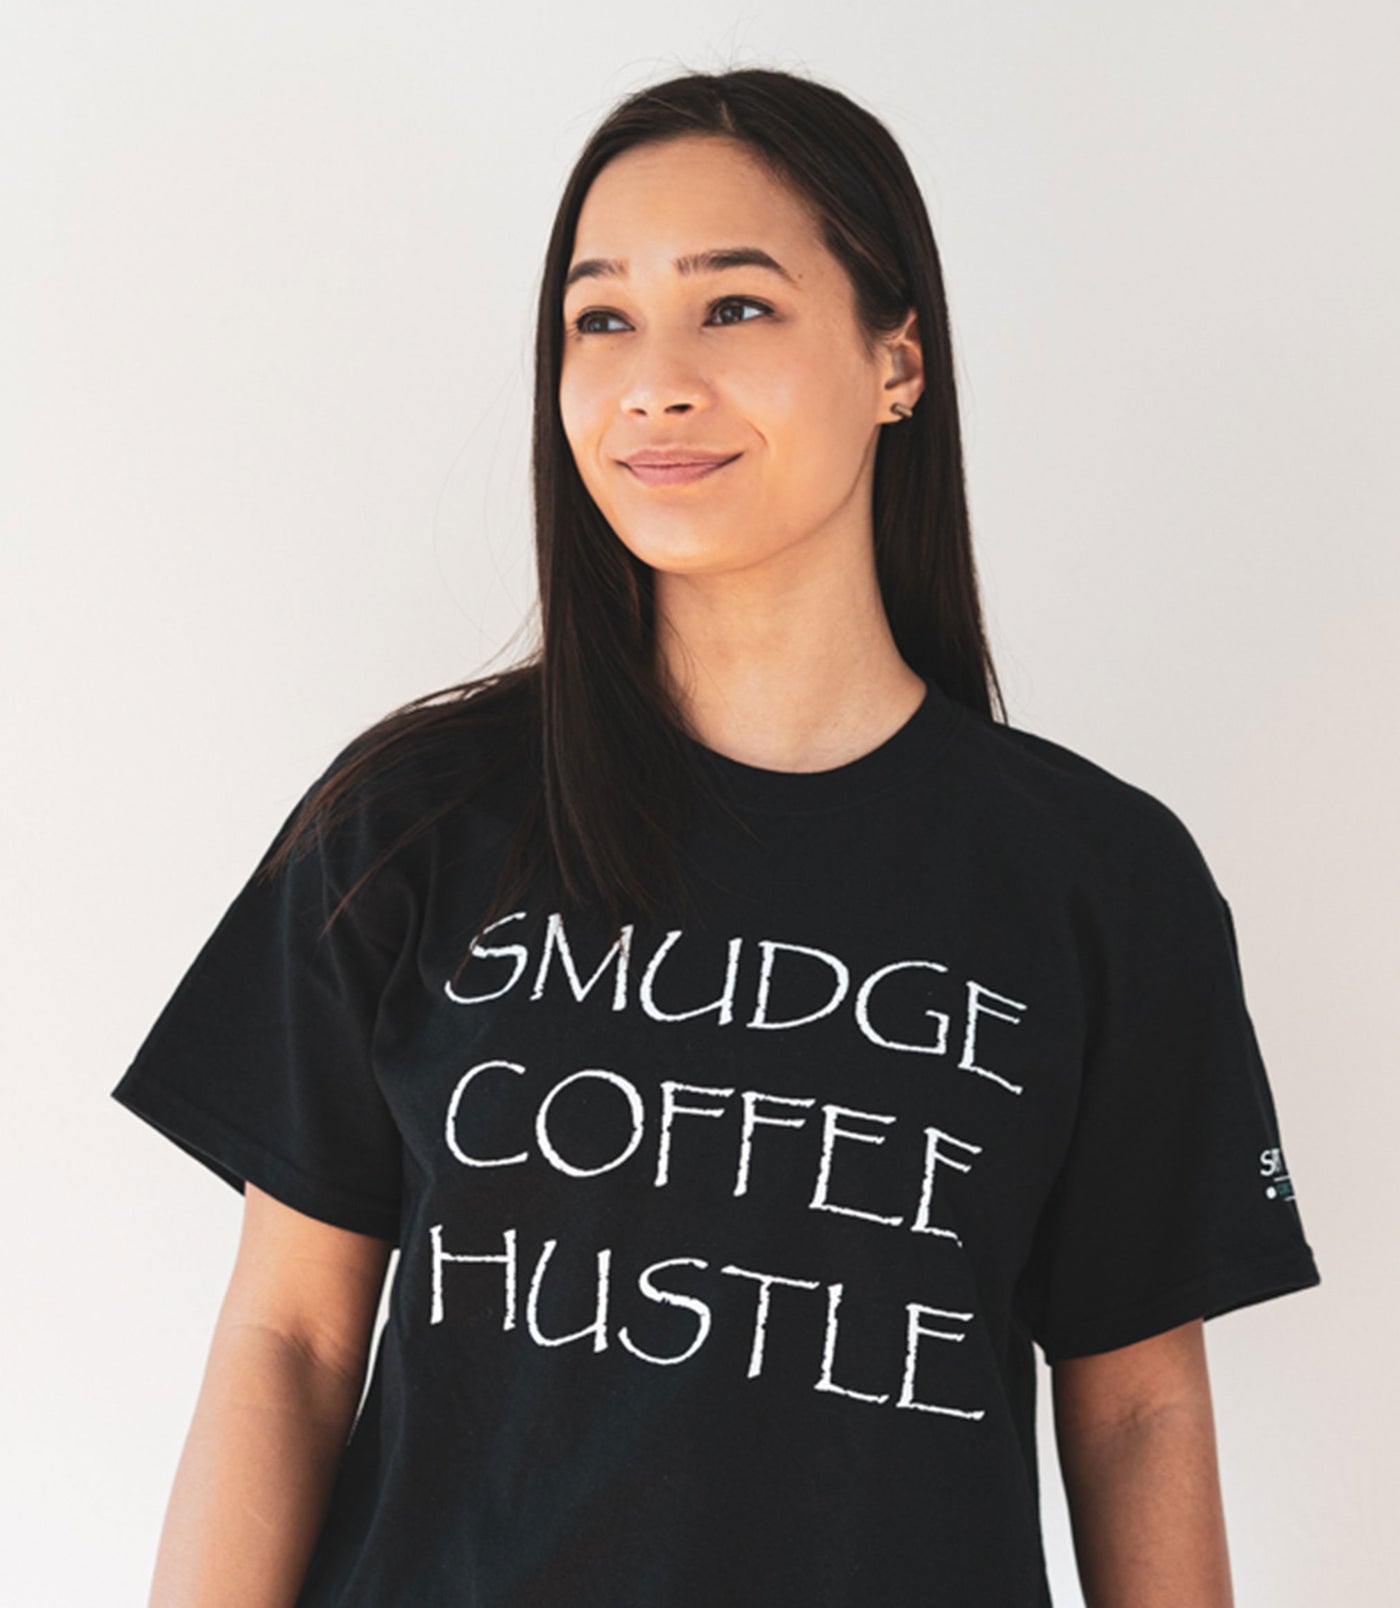 Smudge, Coffee, Hustle T-Shirt - Spirit Bear Coffee Company, Order coffee online Canada,  wholesale coffee, organic and fair trade coffee